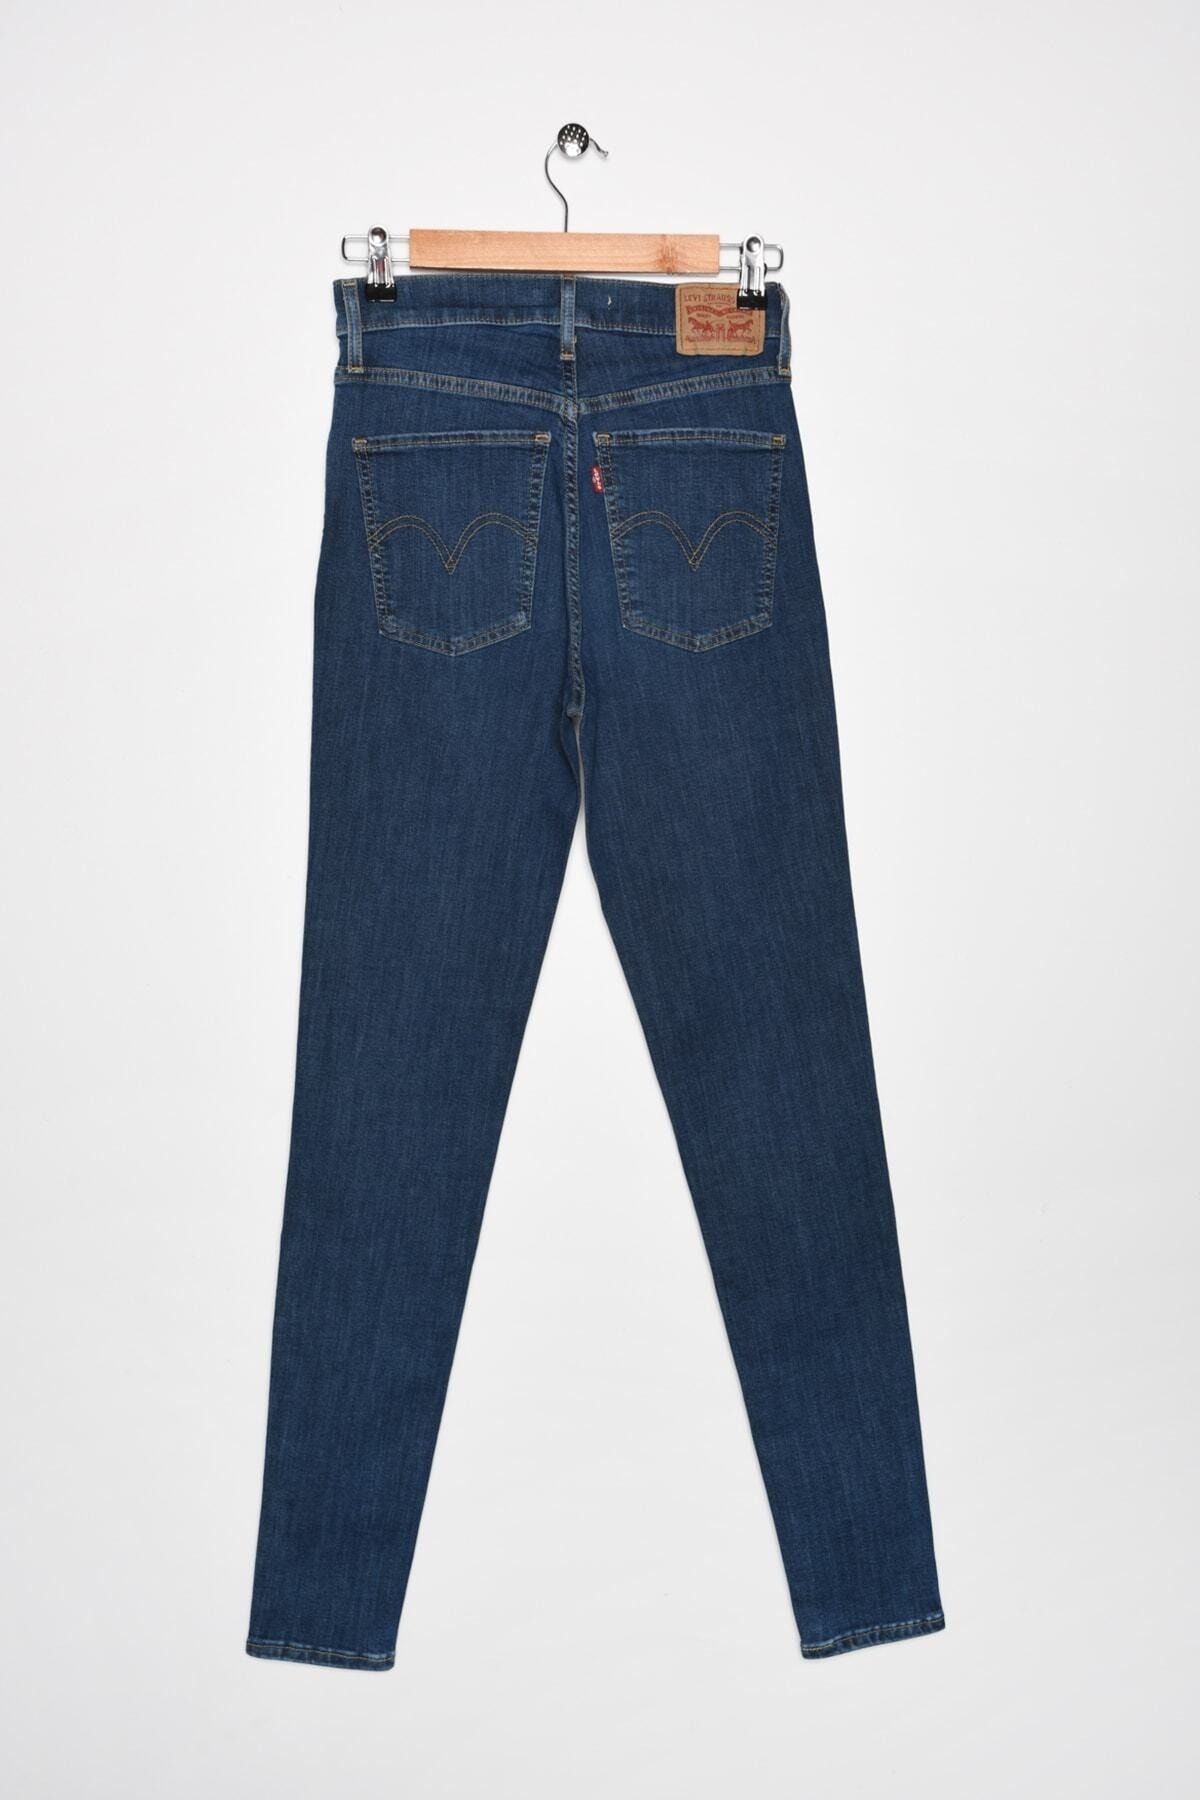 Levi's شلوار جین بلند زنانه سوپر اسکینی 22791-0164